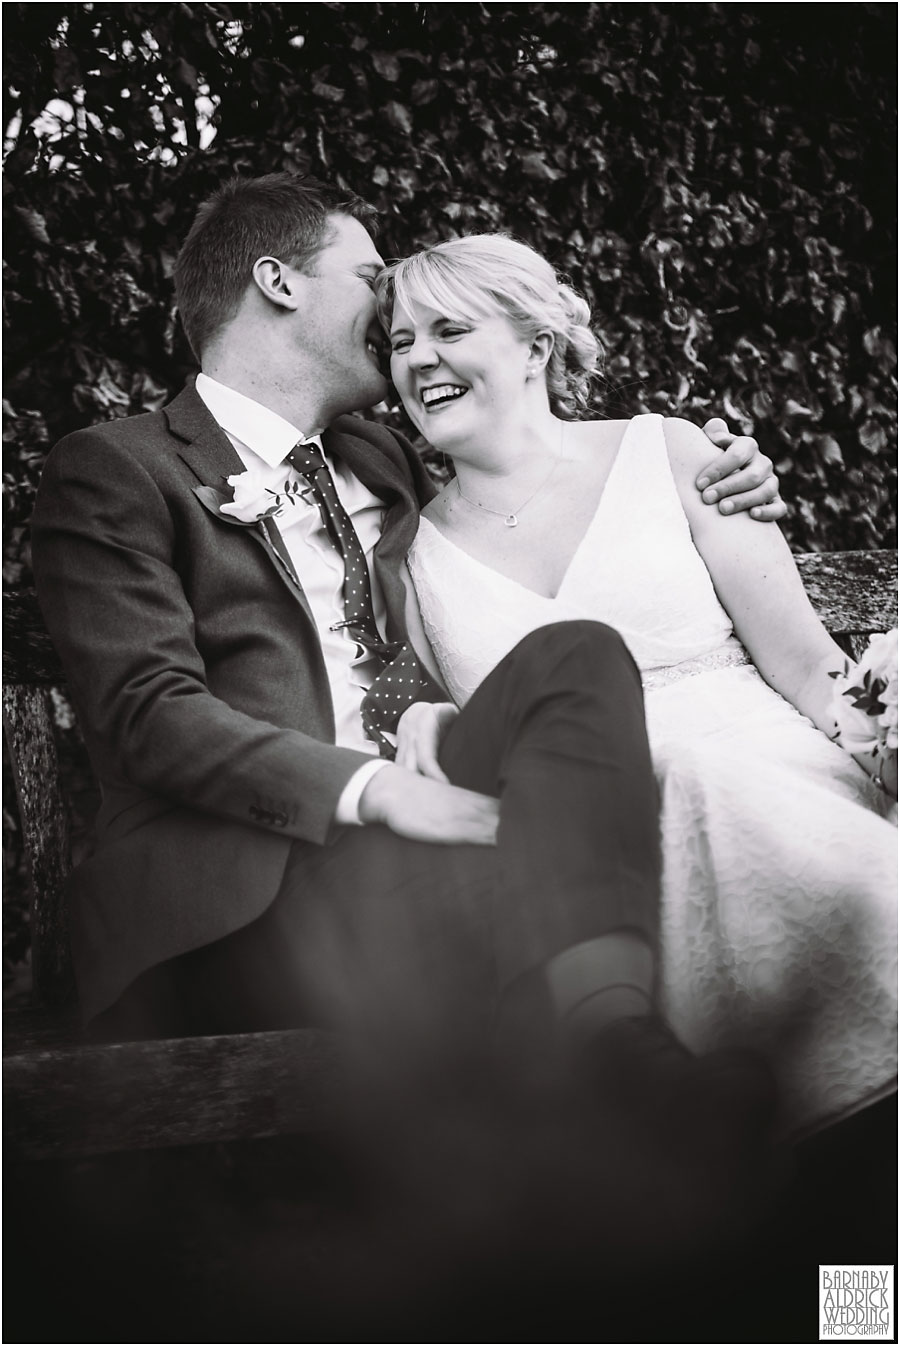 Star Inn Harome Wedding Photography,Barnaby Aldrick Wedding Photography,North Yorkshire Wedding Photographer,